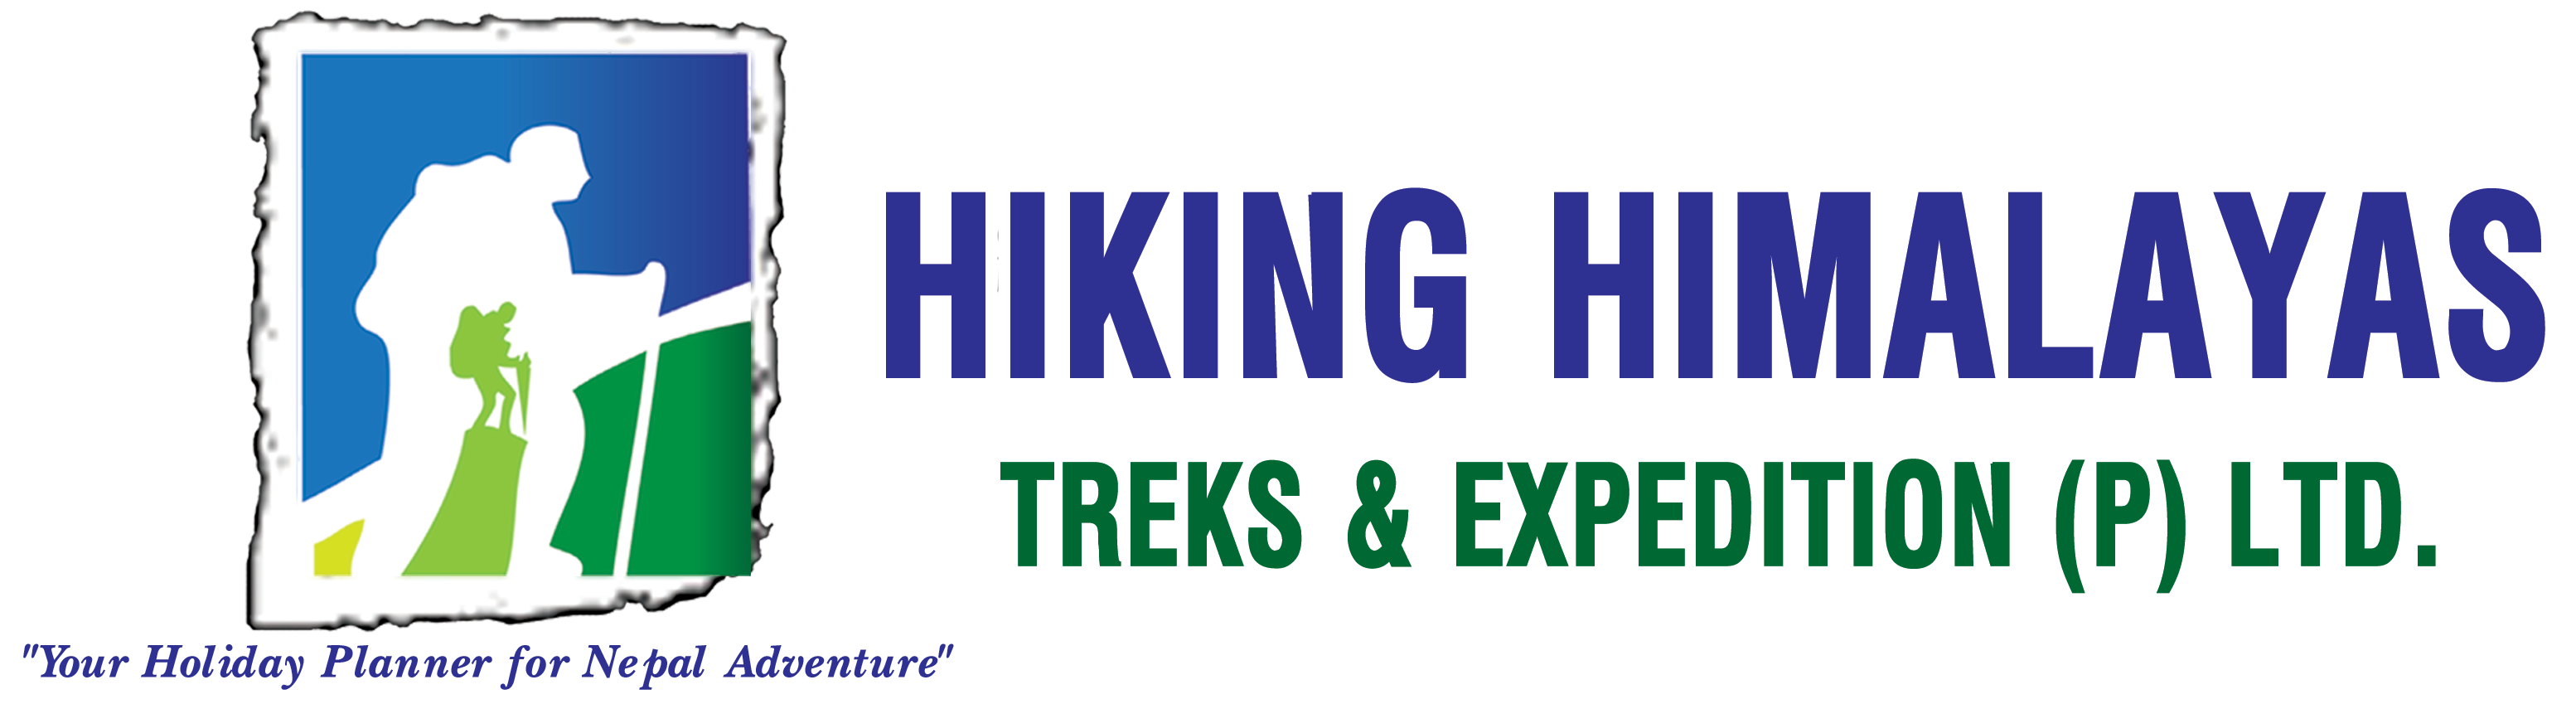 Hiking Himalayas Treks and Expedition